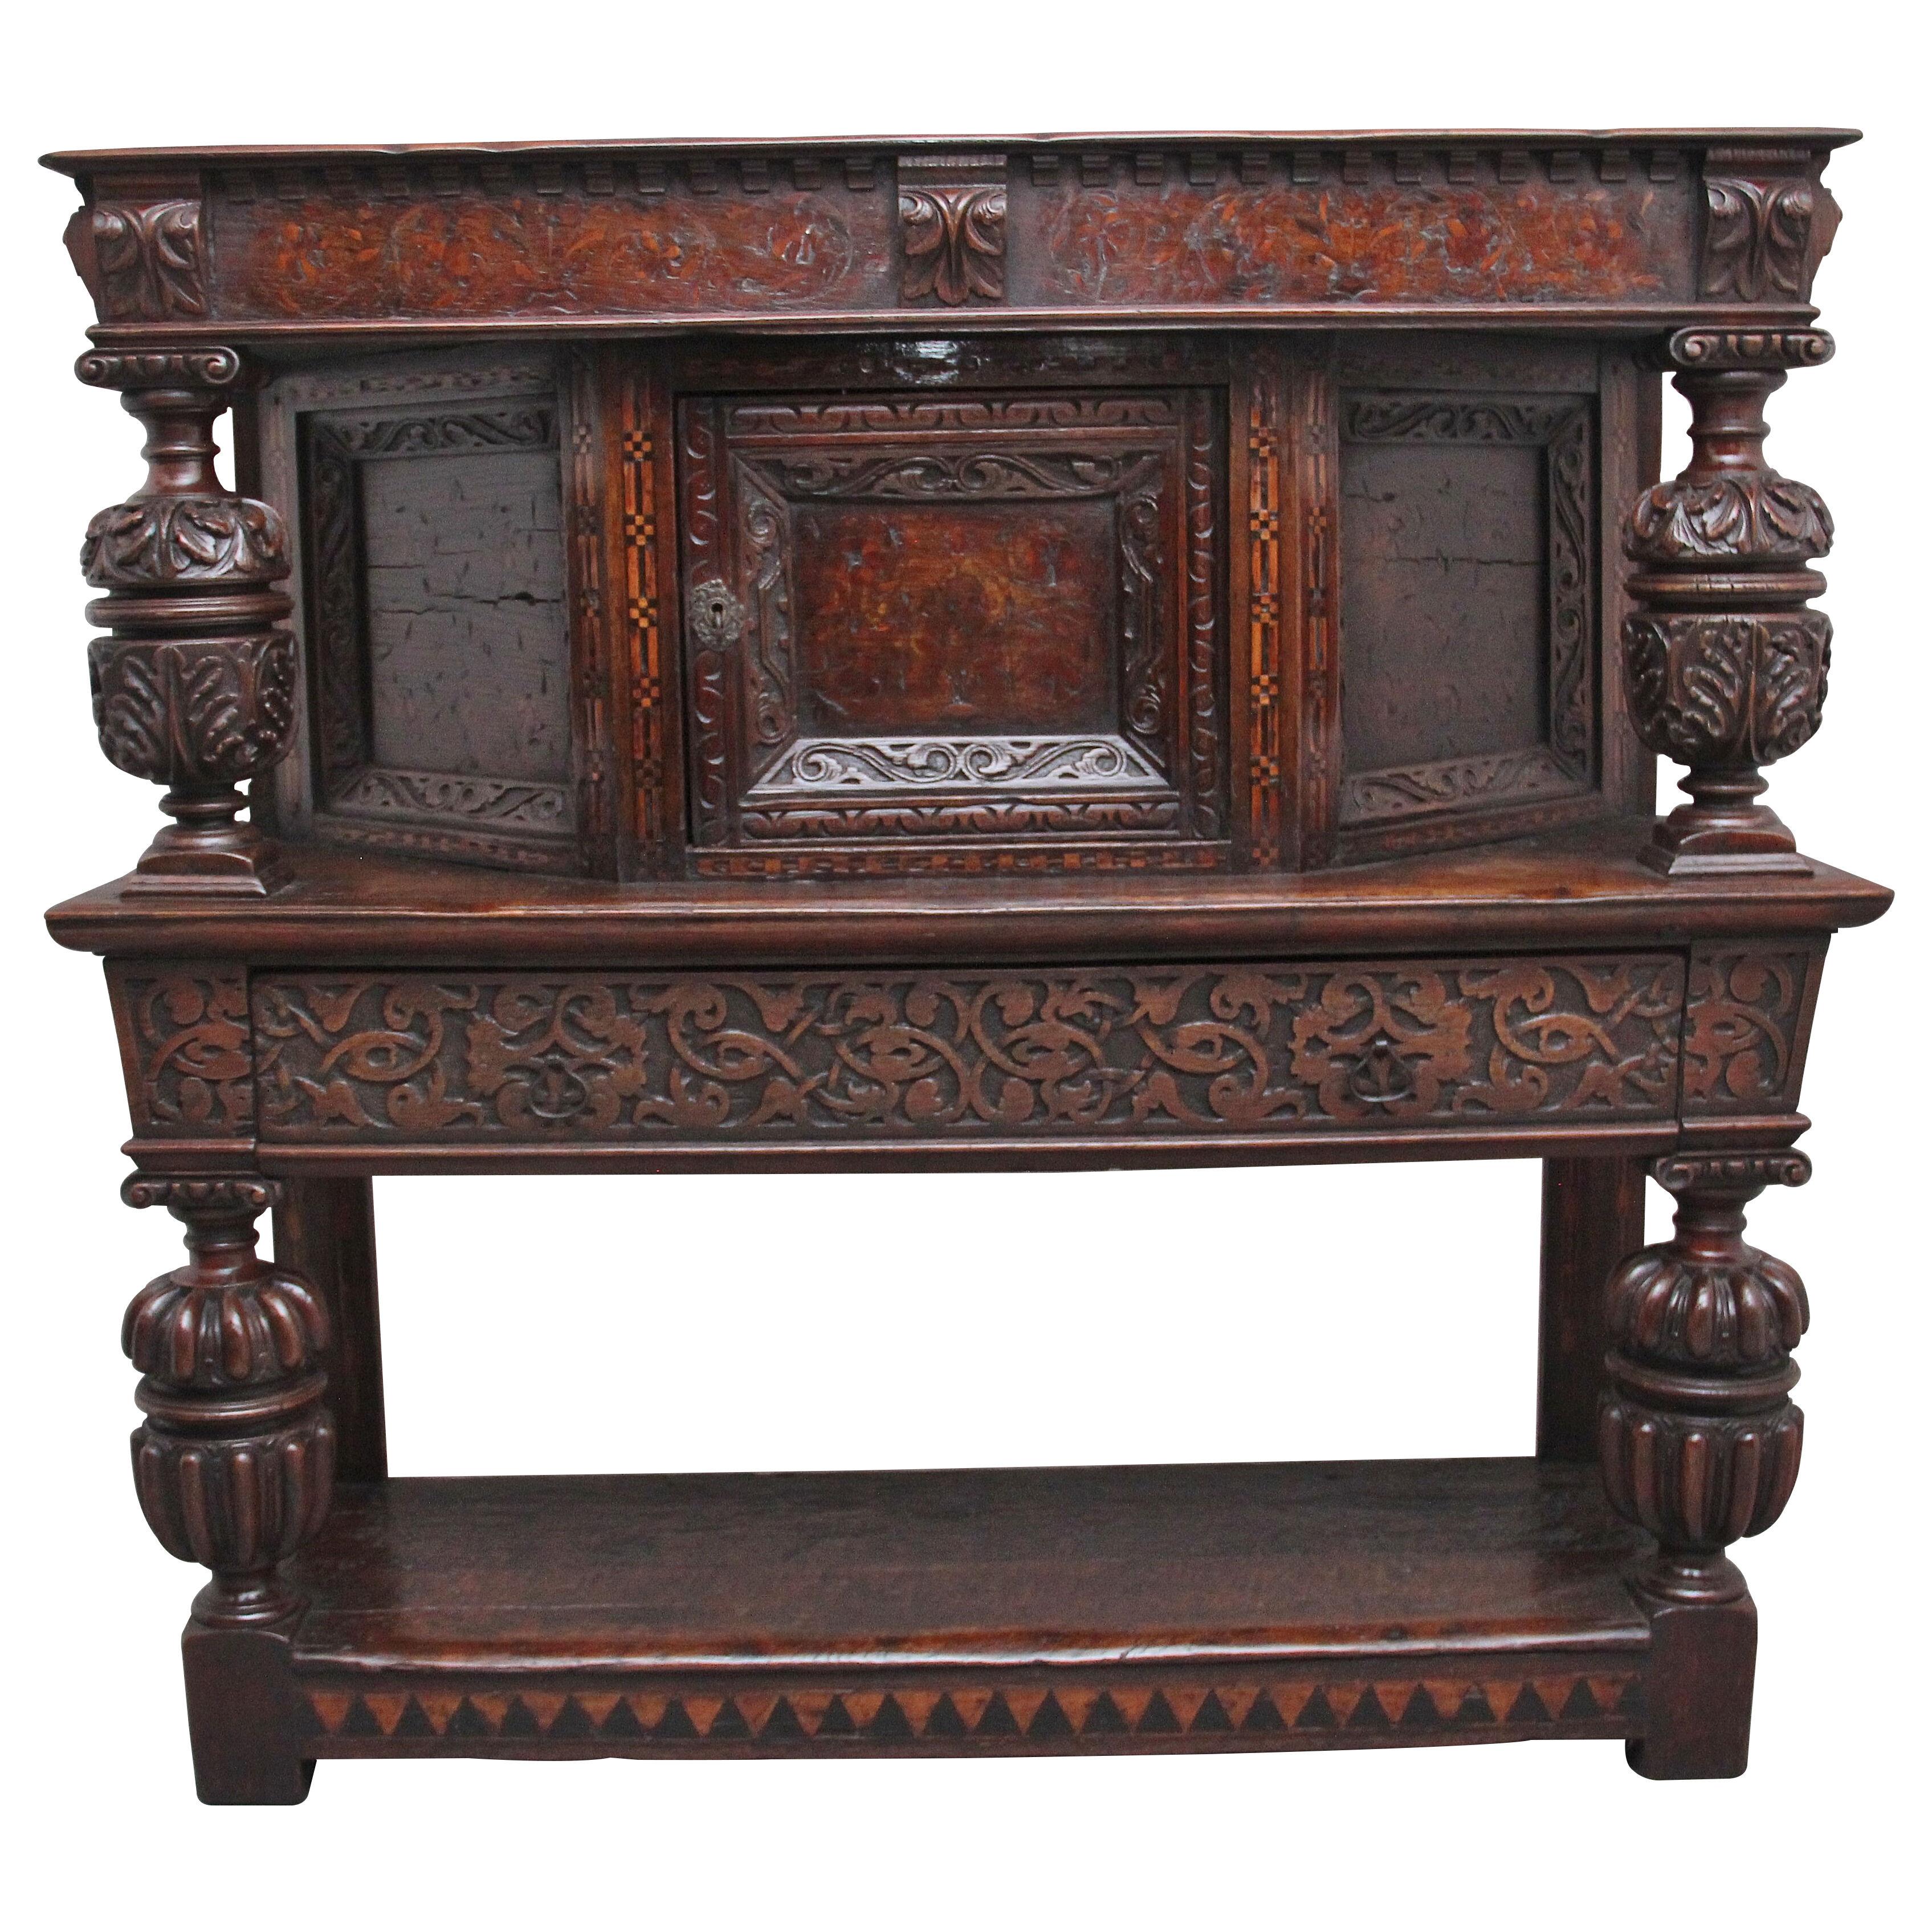 A rare late 16th Century oak court cupboard